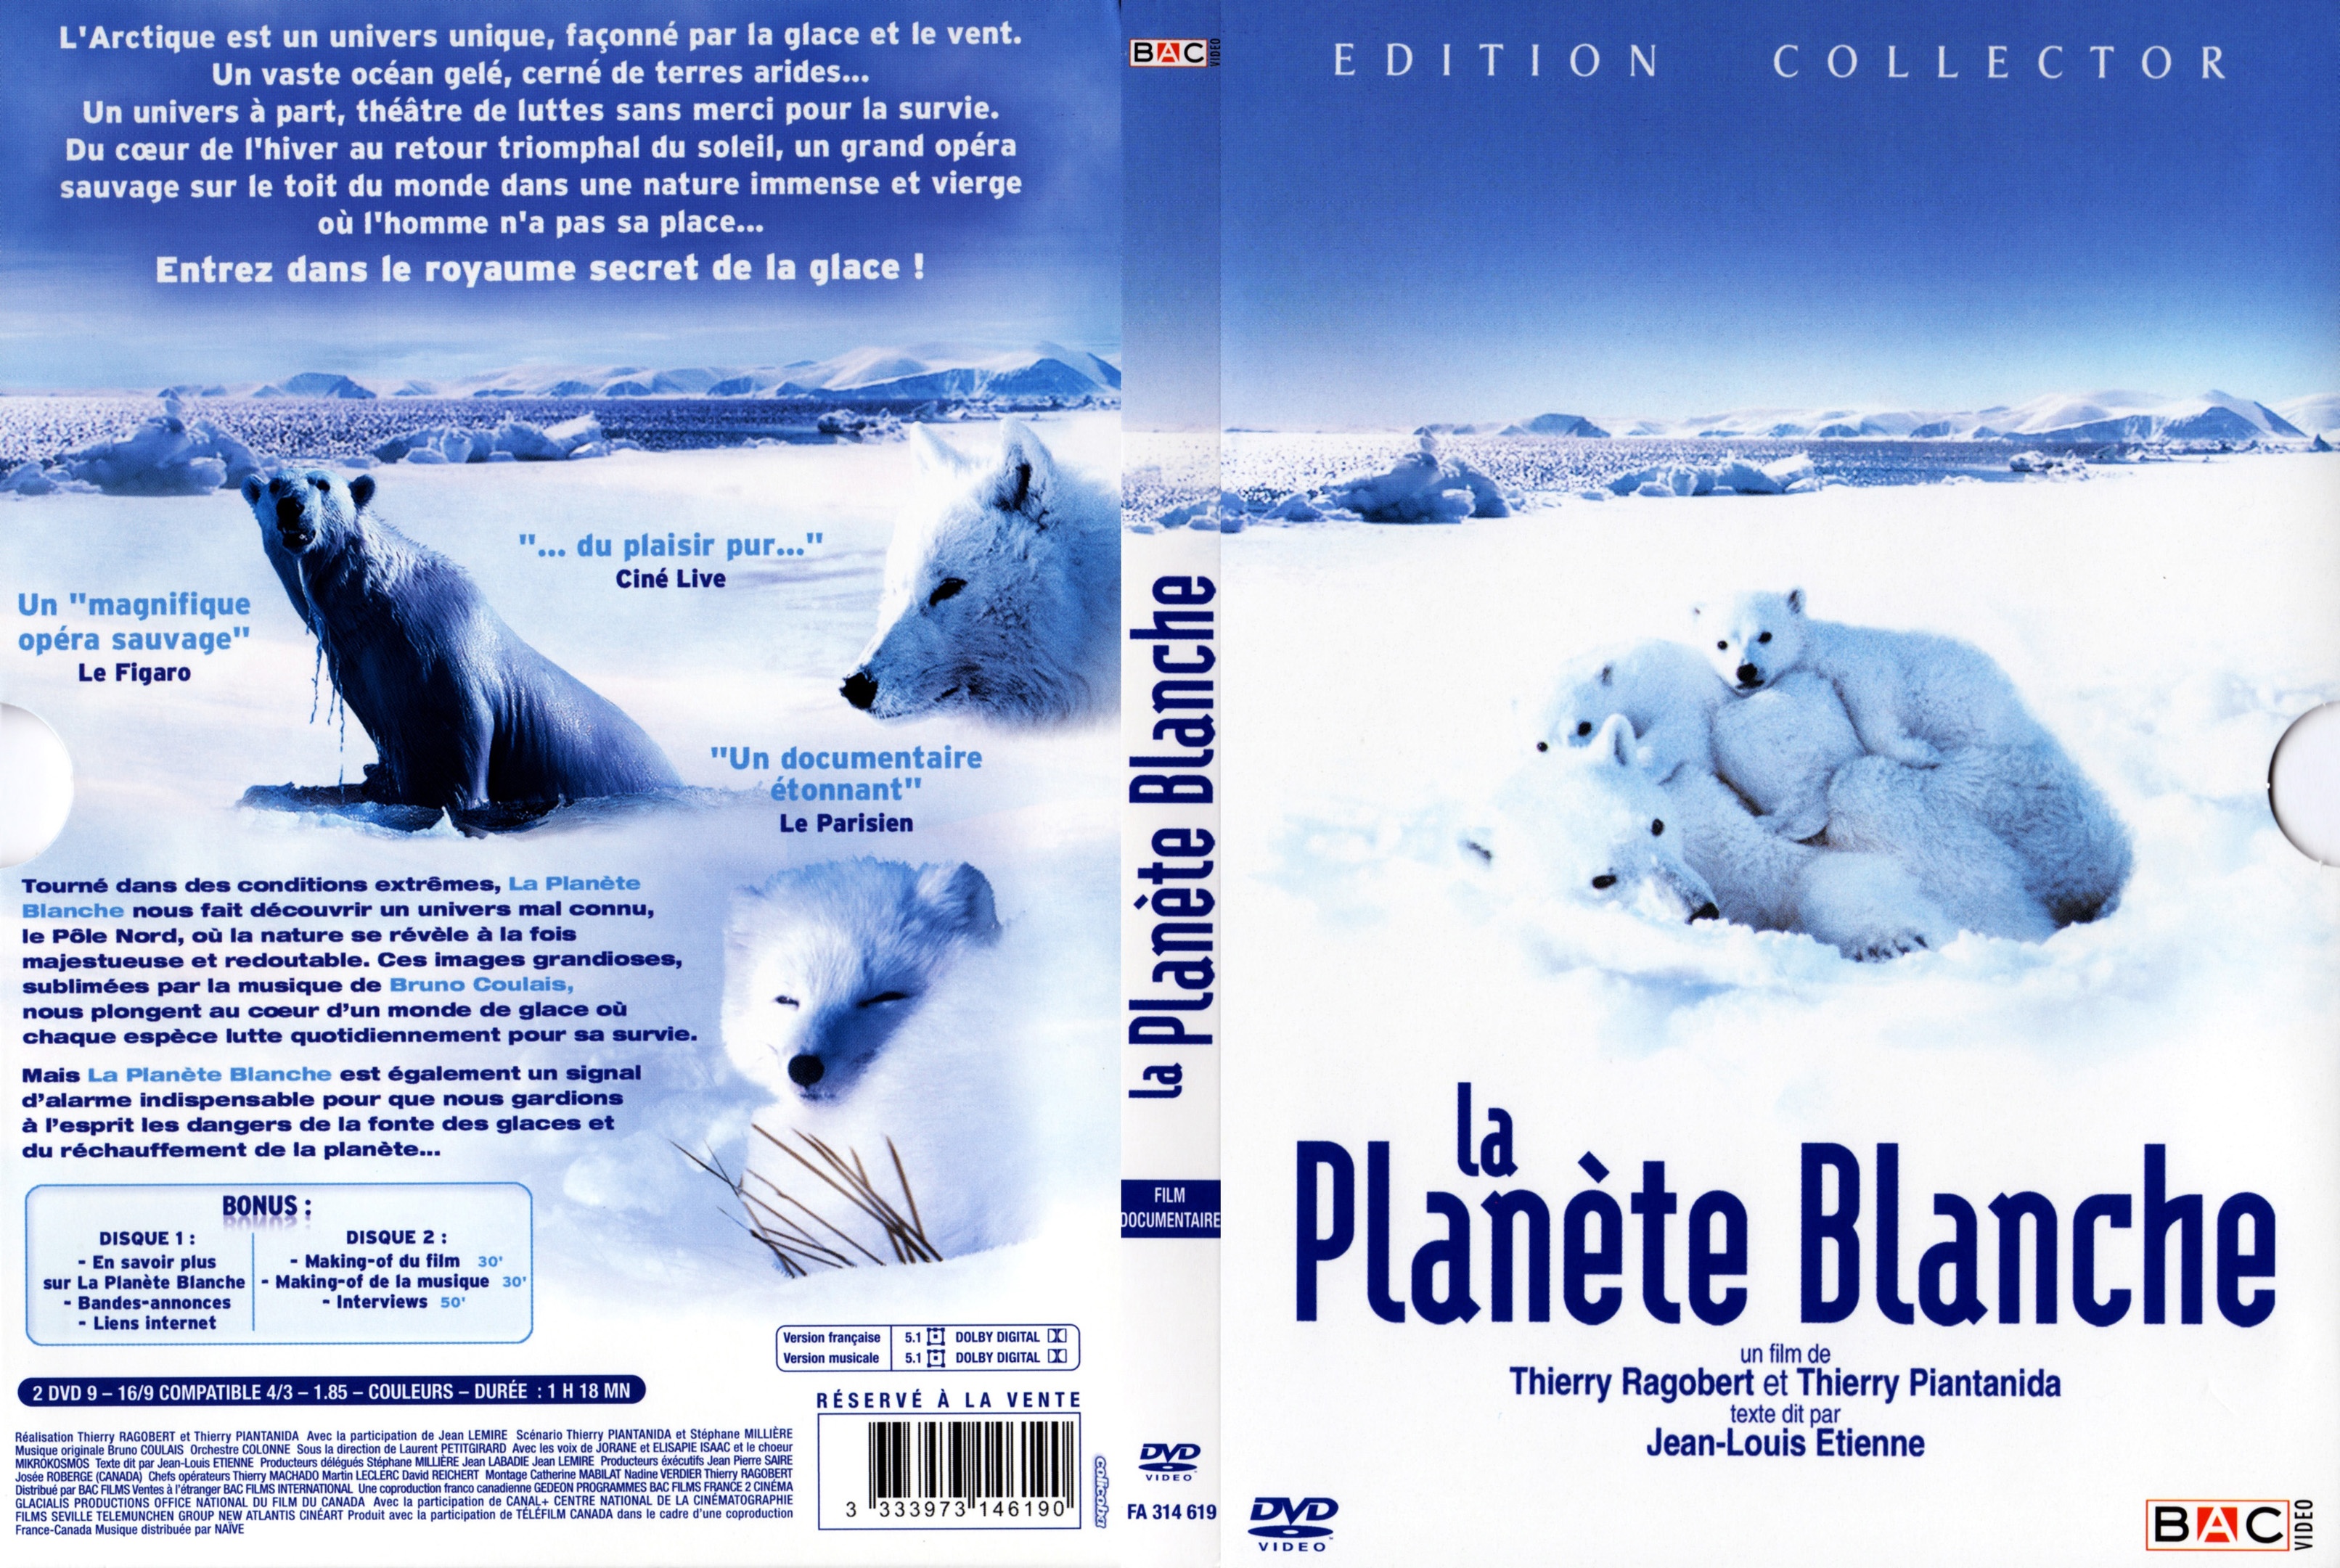 Jaquette DVD La planete blanche v2